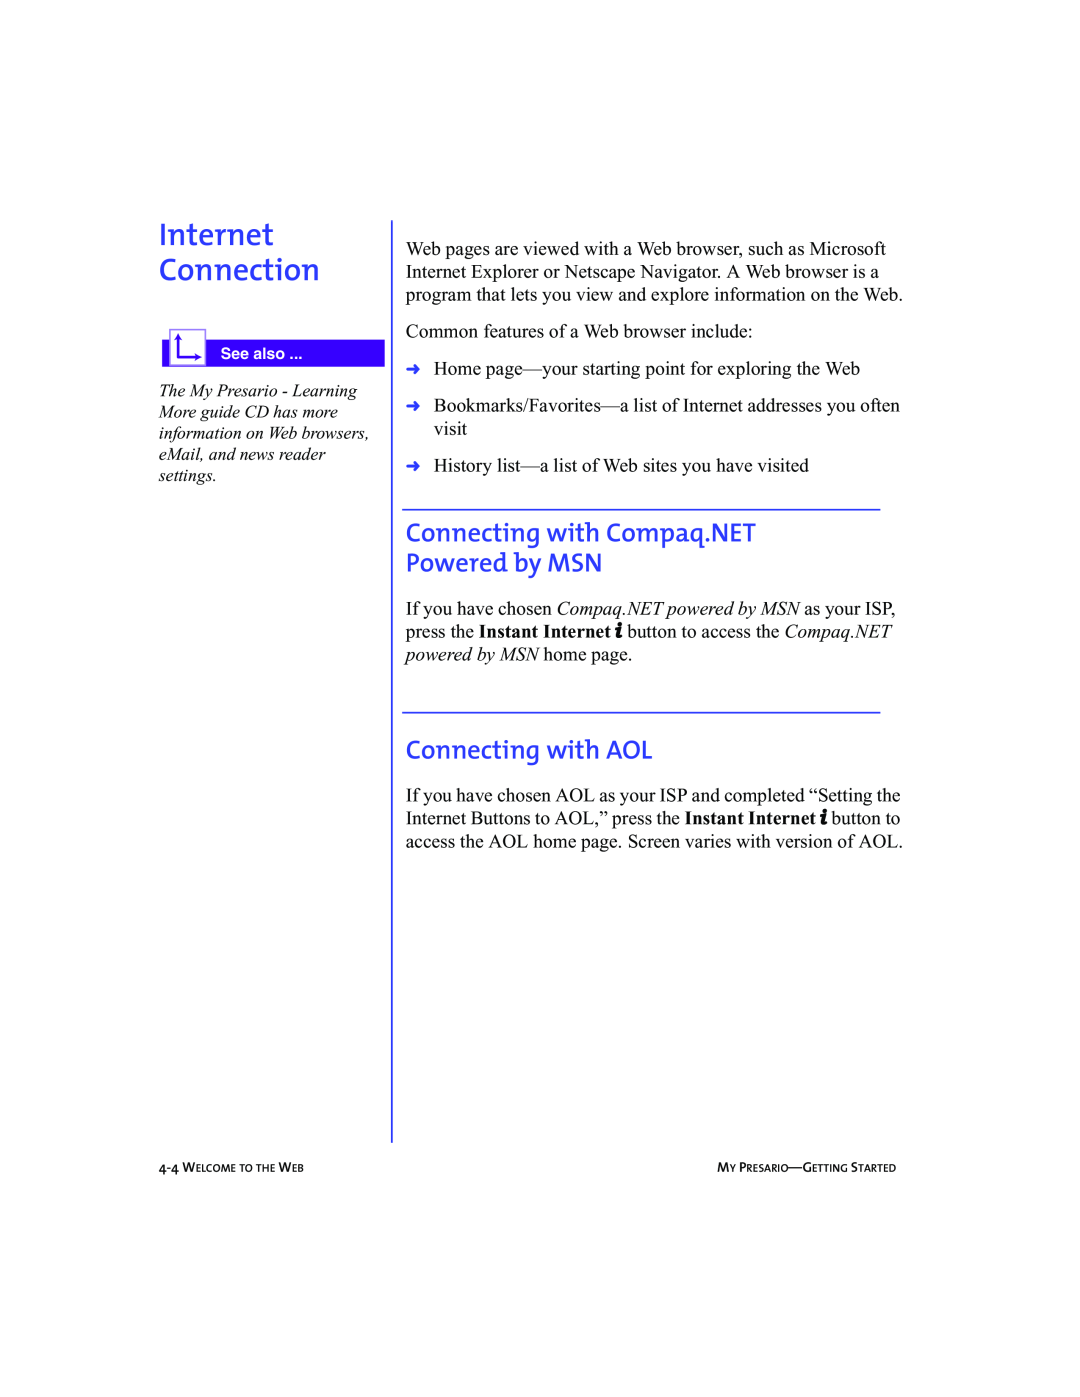 Compaq 5BW474 manual Internet Connection, Connecting with Compaq.NET Powered by MSN, Connecting with AOL 